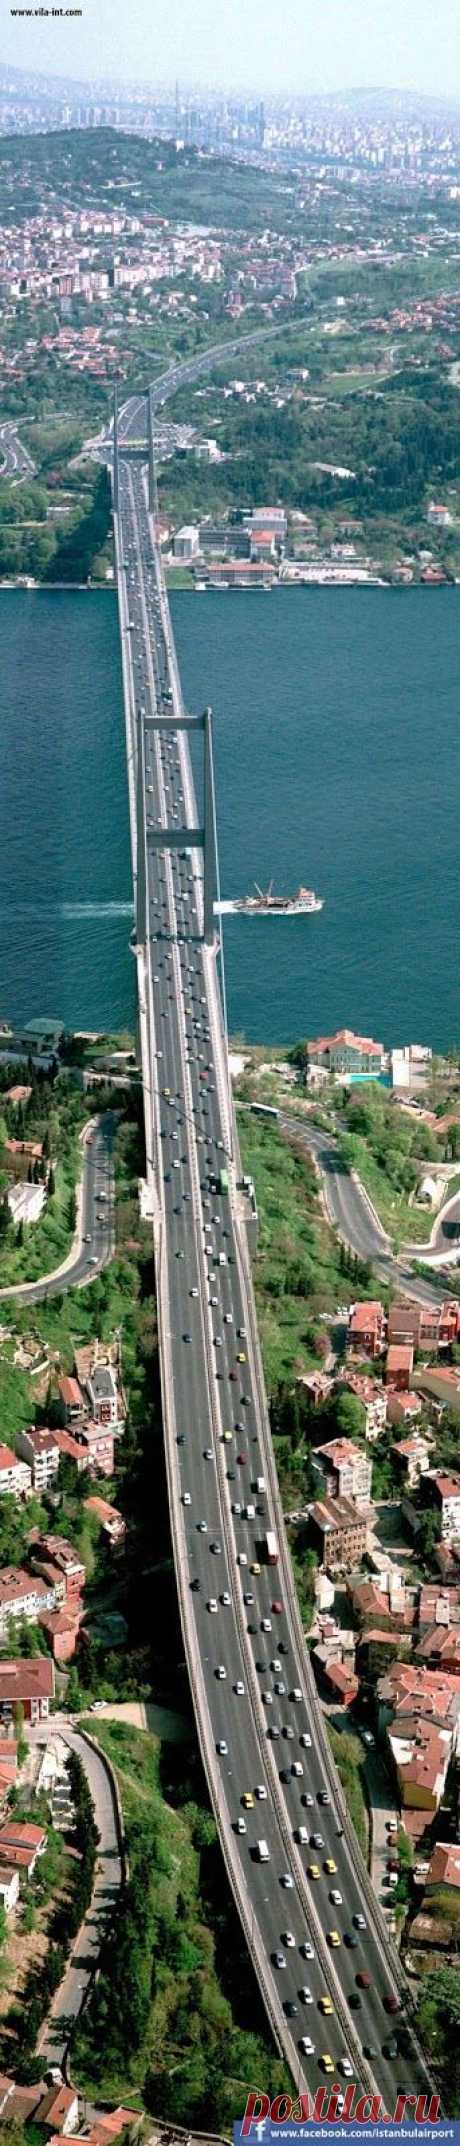 Bosphorus Bridge Istanbul  |  Найдено на сайте indulgy.com.